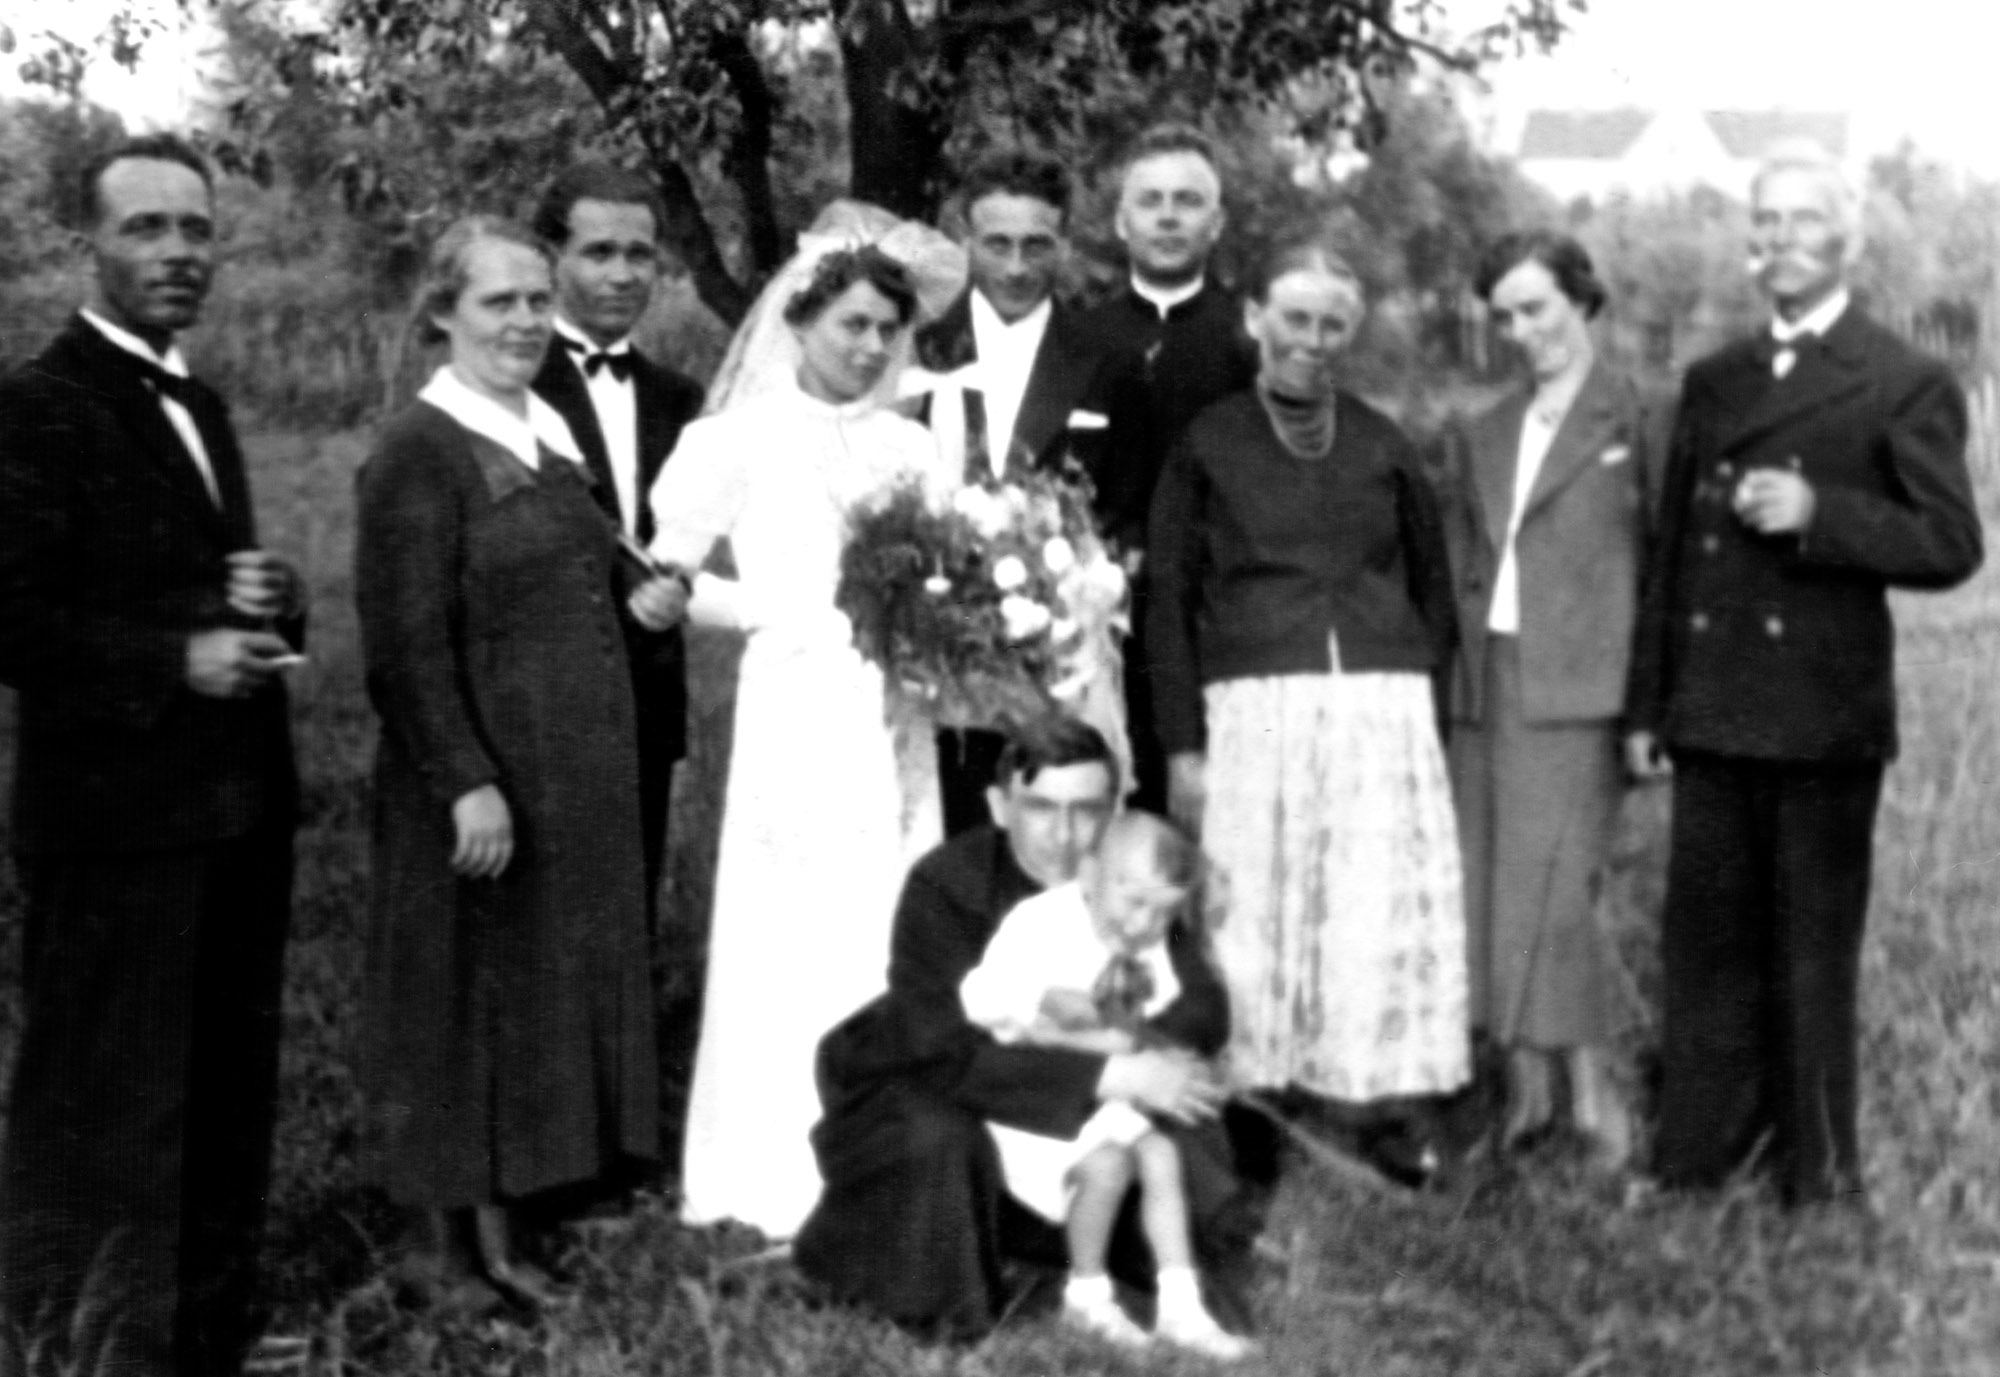 Mariage de Franciszka Duda et Stanisław Reizer - Ćmielów - 9 juillet 1939